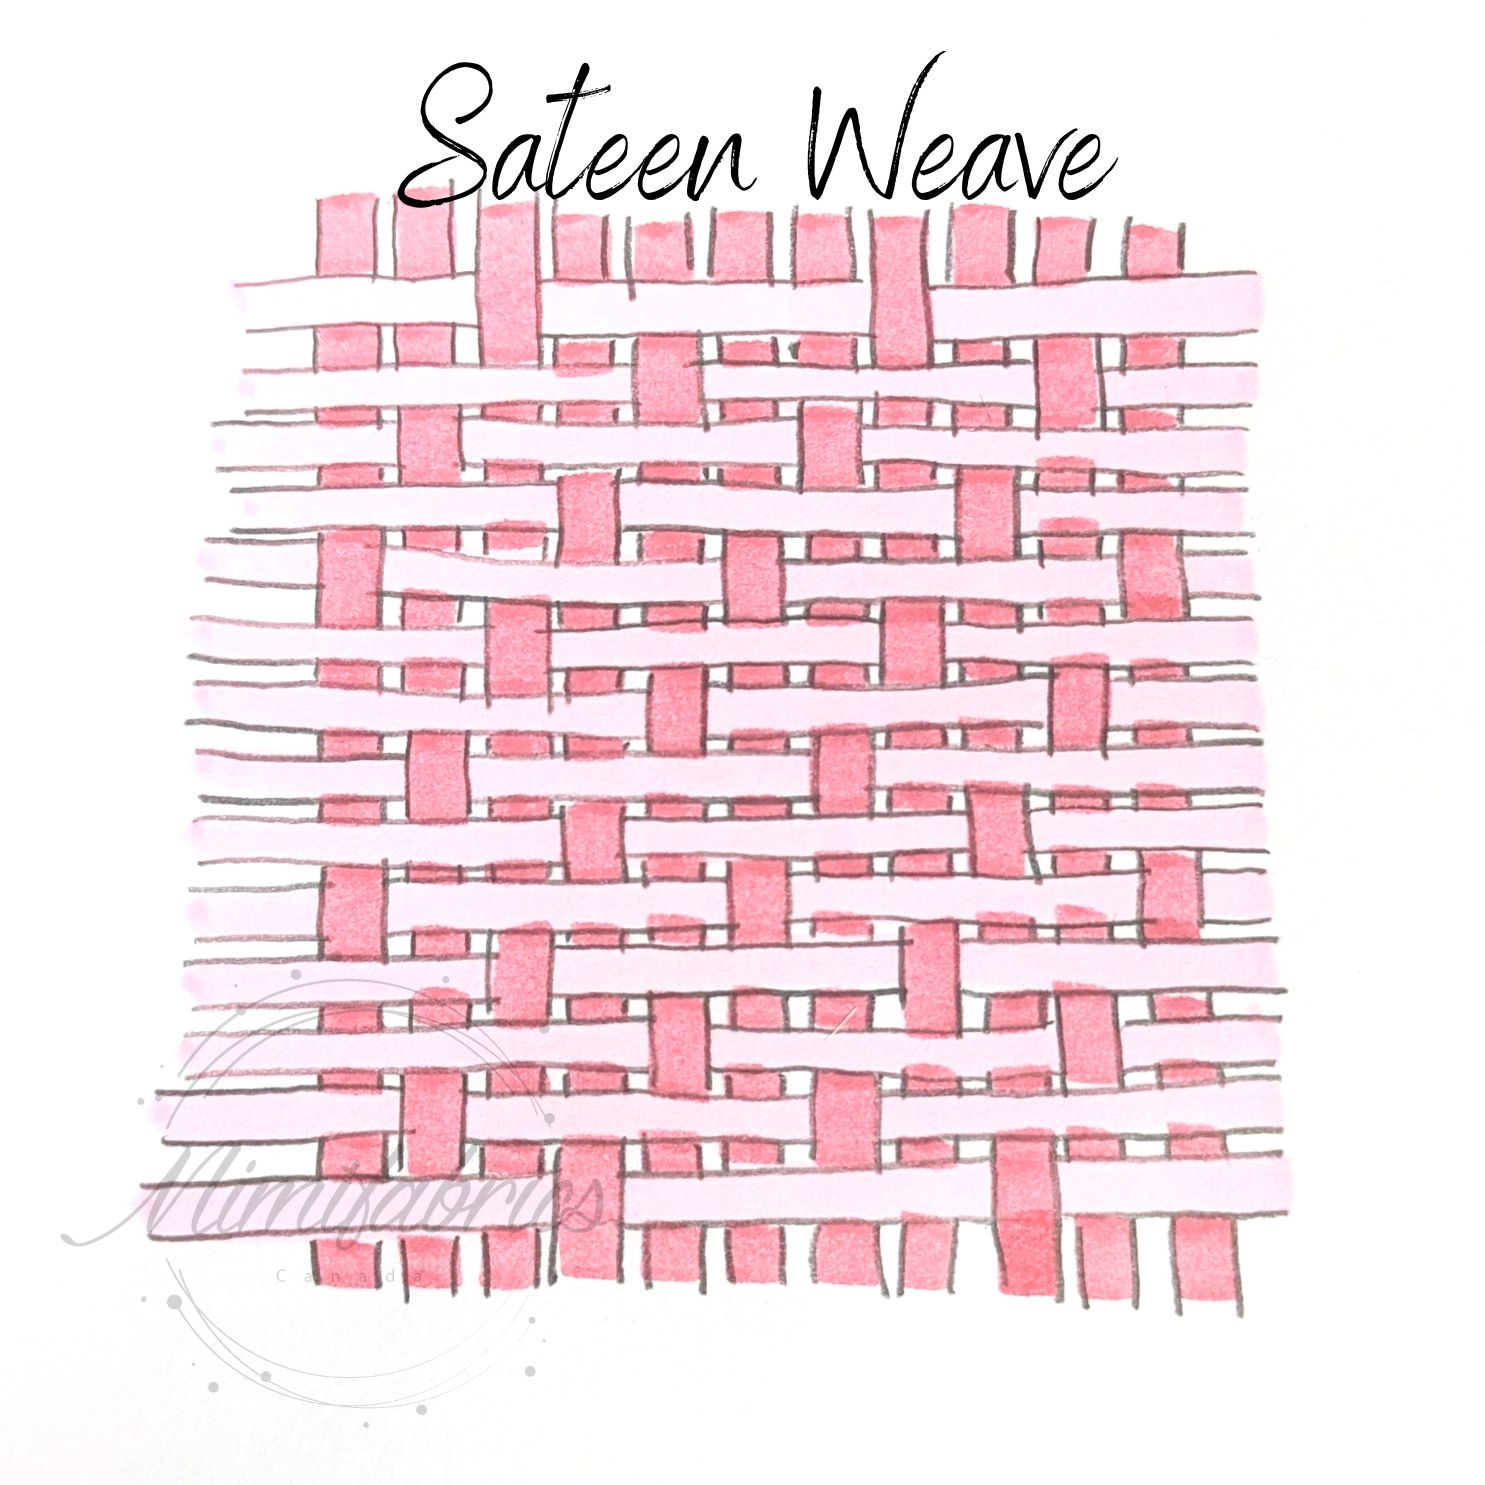 Sateen Weave Fabric Illustration